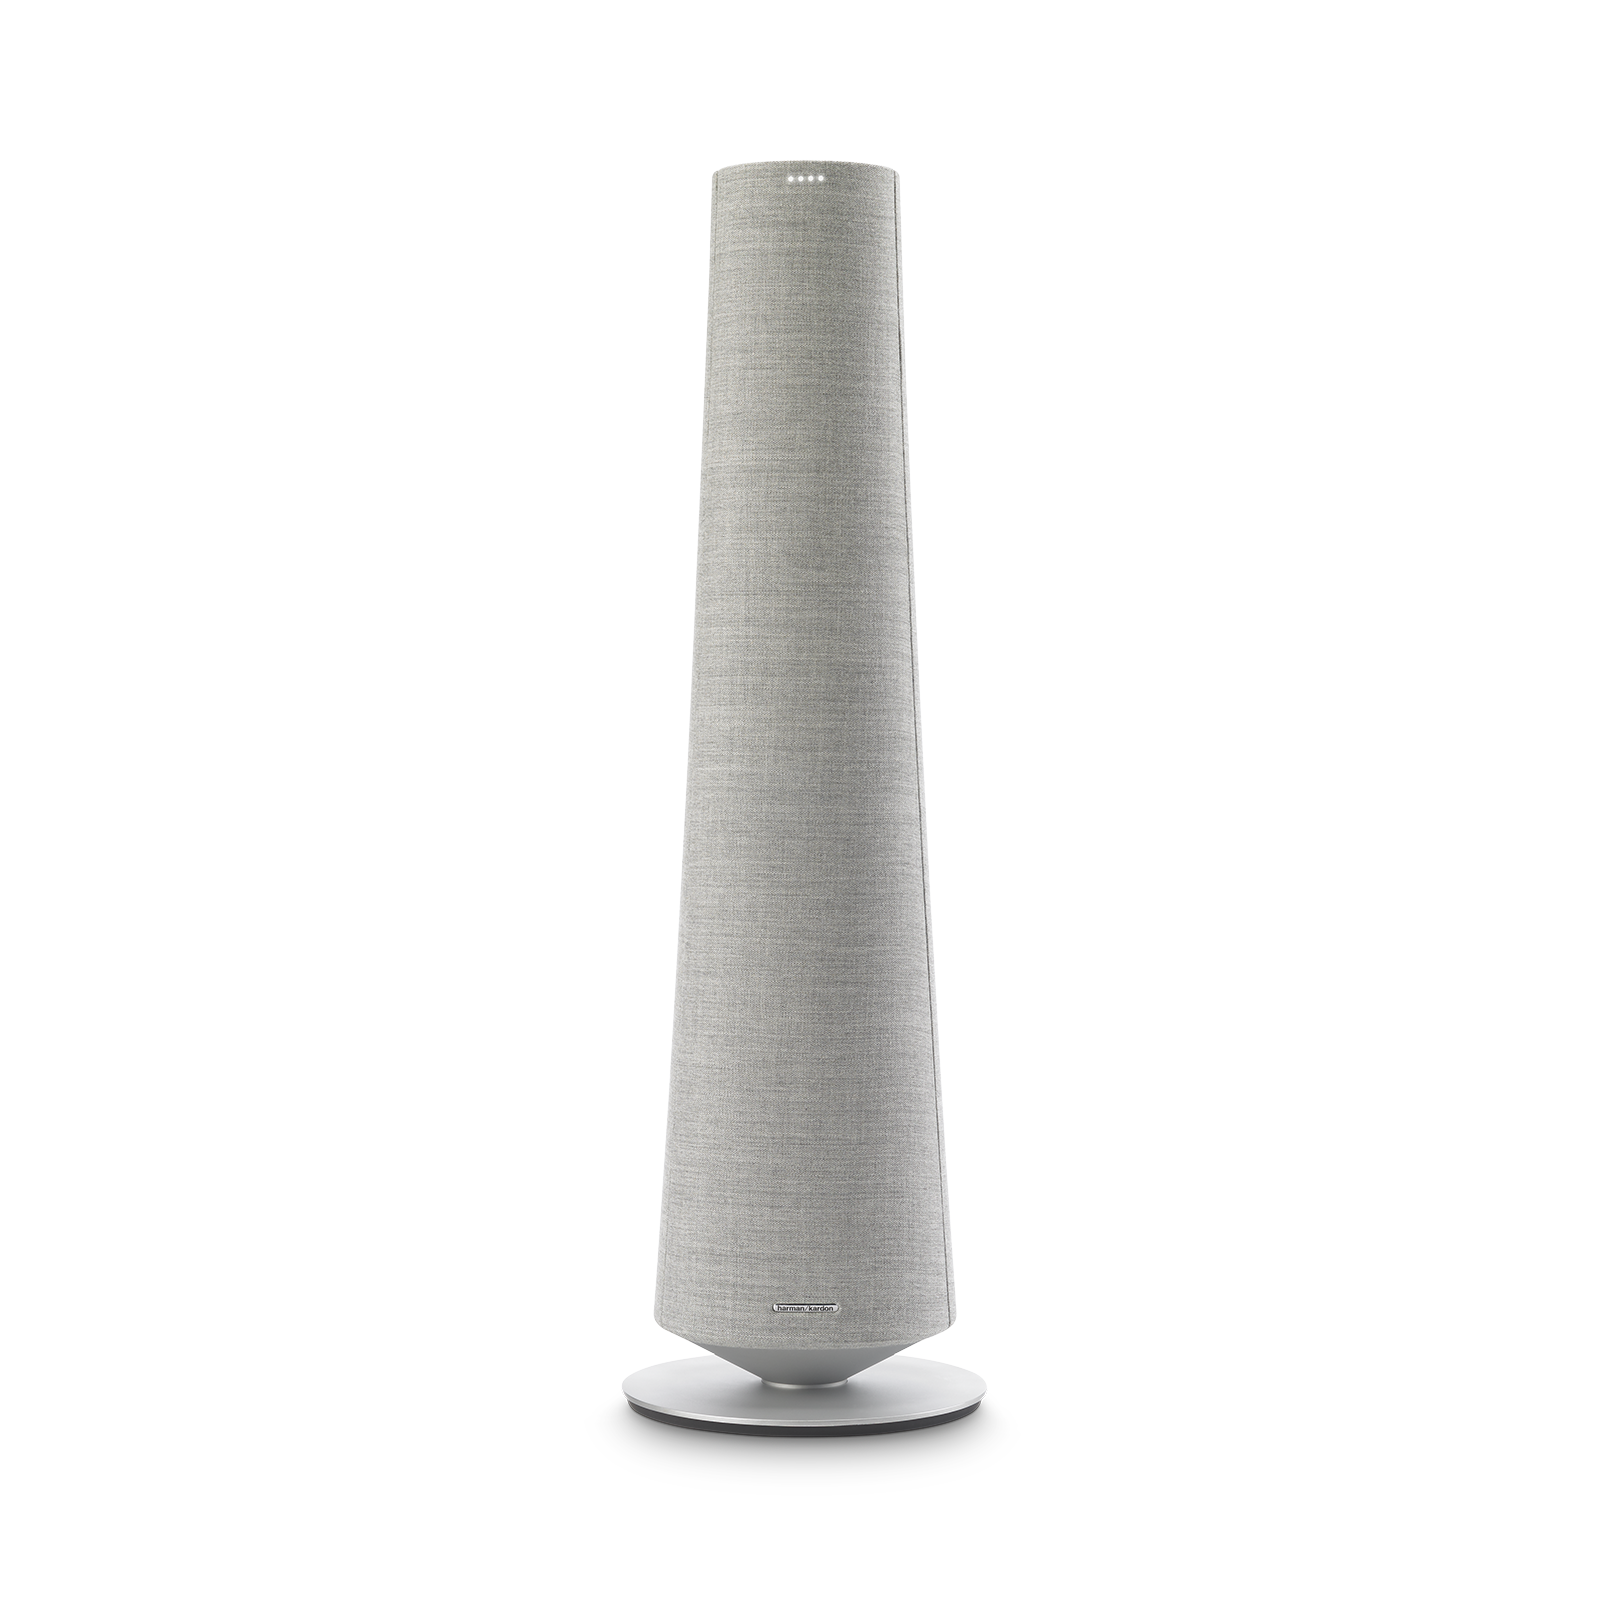 Harman Kardon Citation Tower - Grey - Smart Premium Floorstanding Speaker that delivers an impactful performance - Front